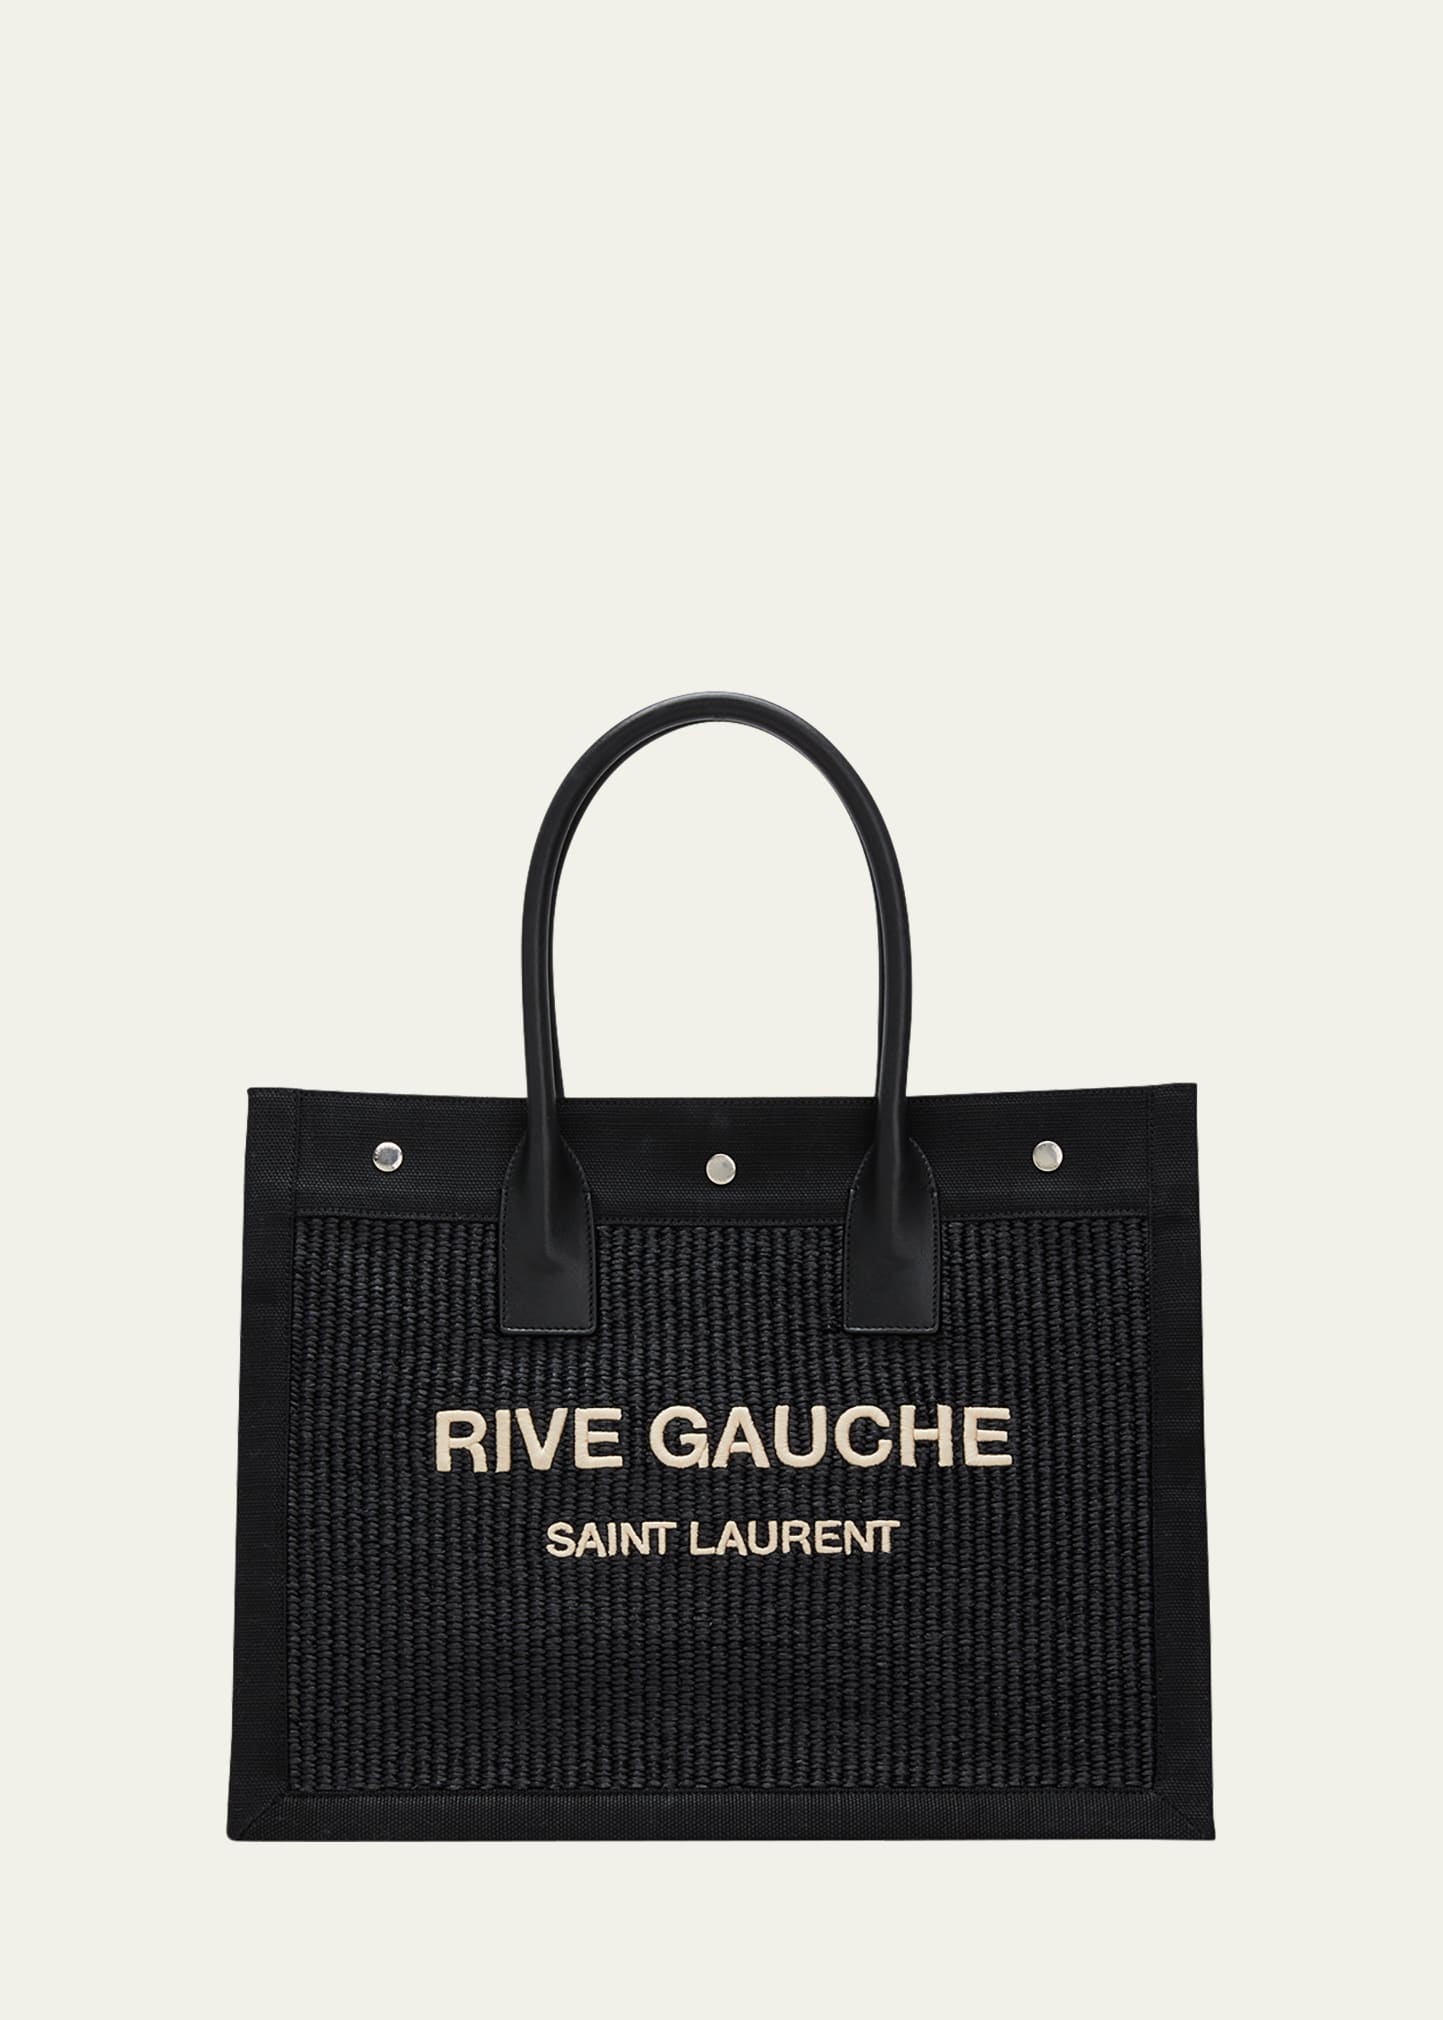 Saint Laurent Women's Rive Gauche Small Tote Bag In Raffia And Leather In Nero Natural Beige